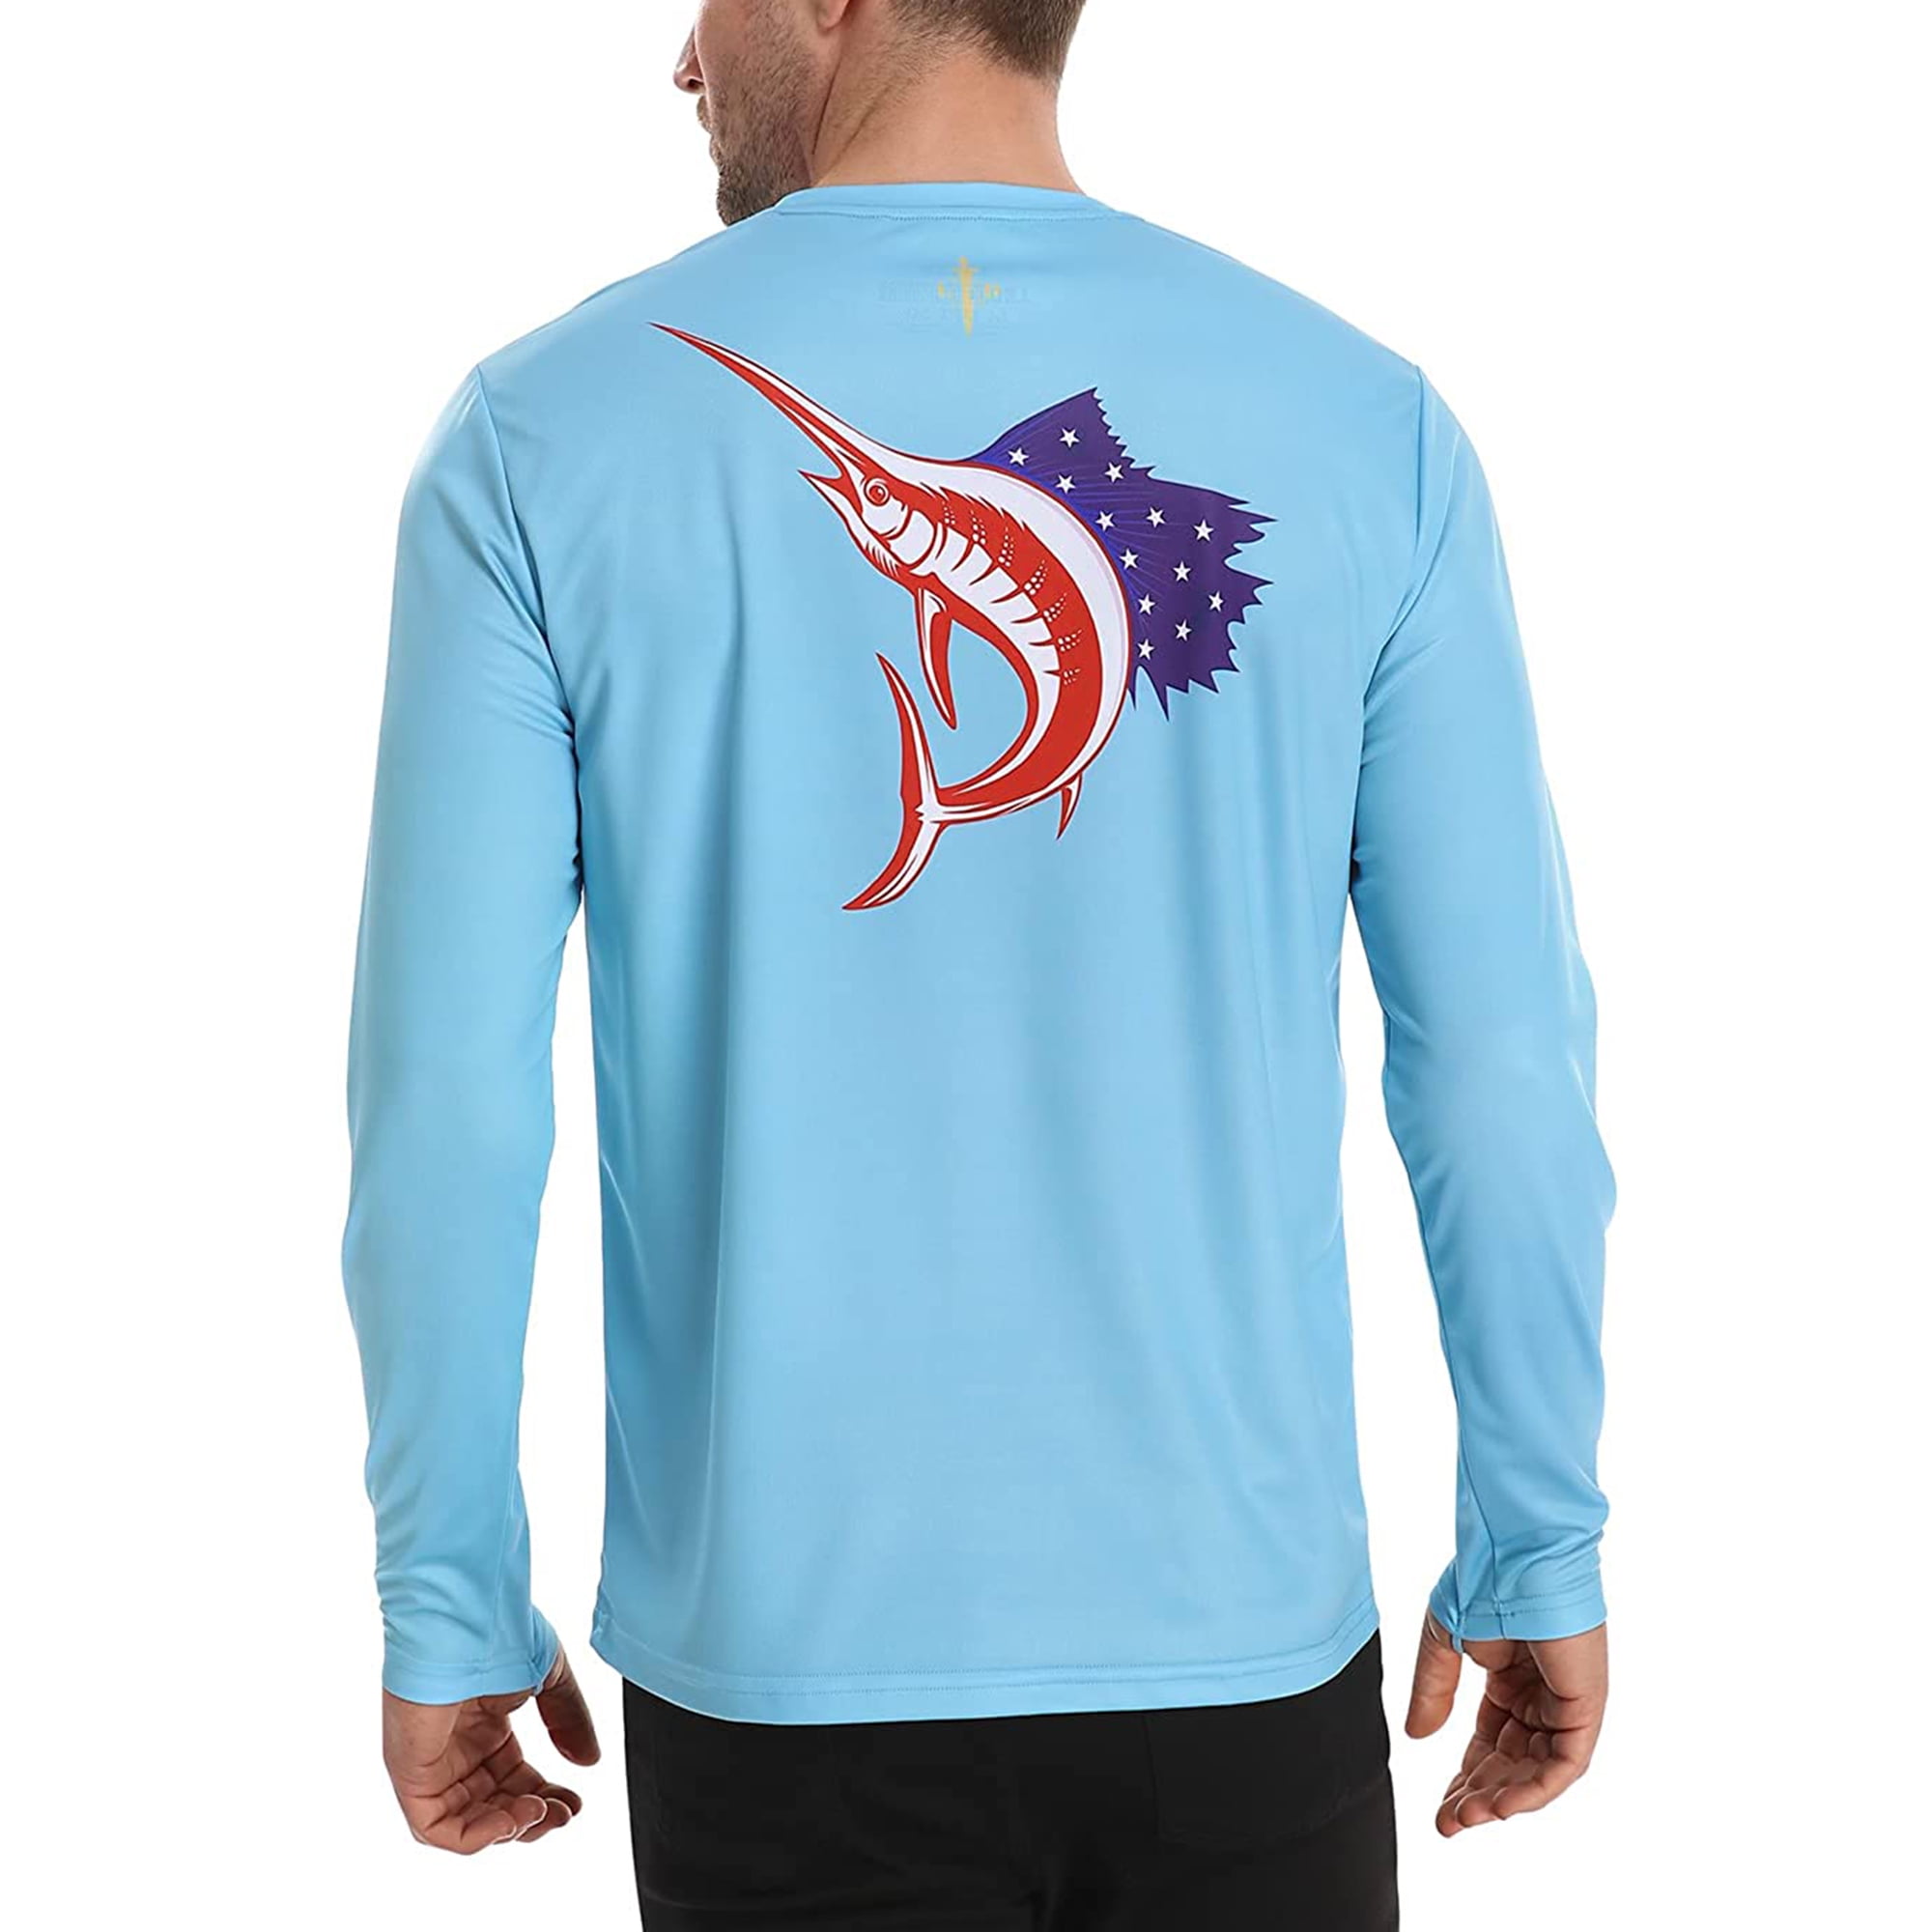 LRD Fishing Shirts for Men Long Sleeve UPF 50 Sun Protection ...